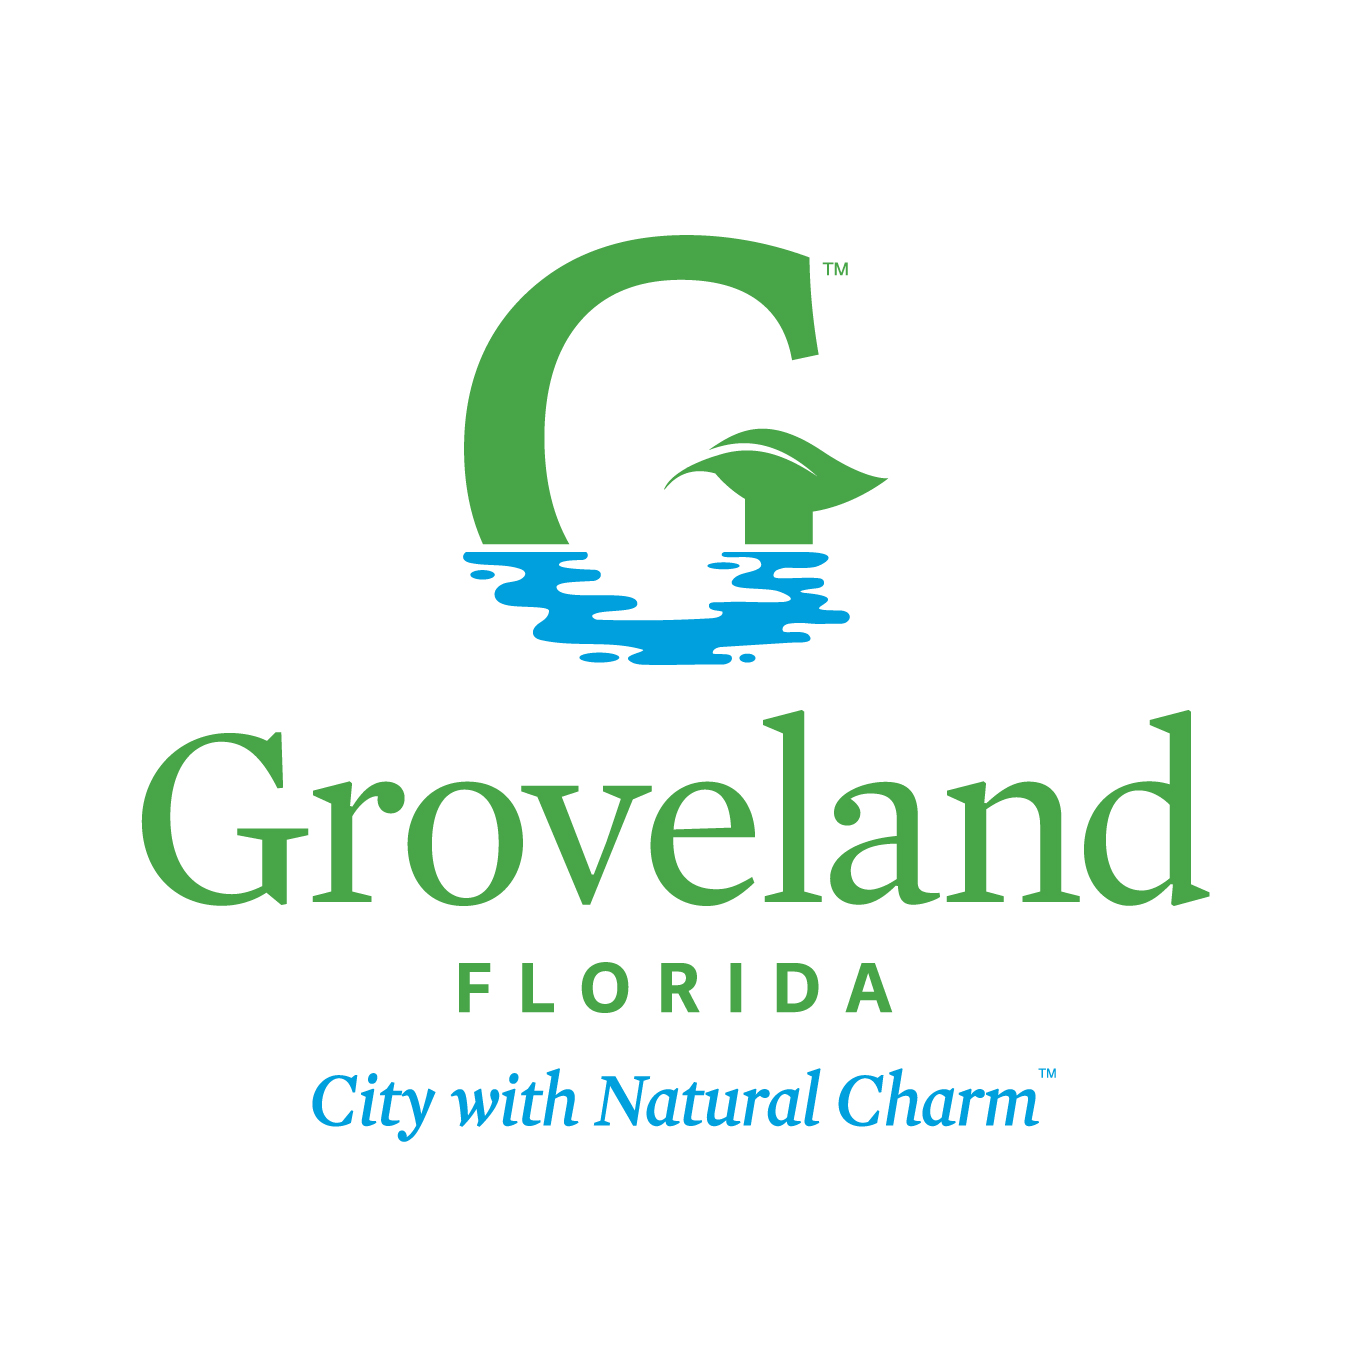 City of Groveland logo